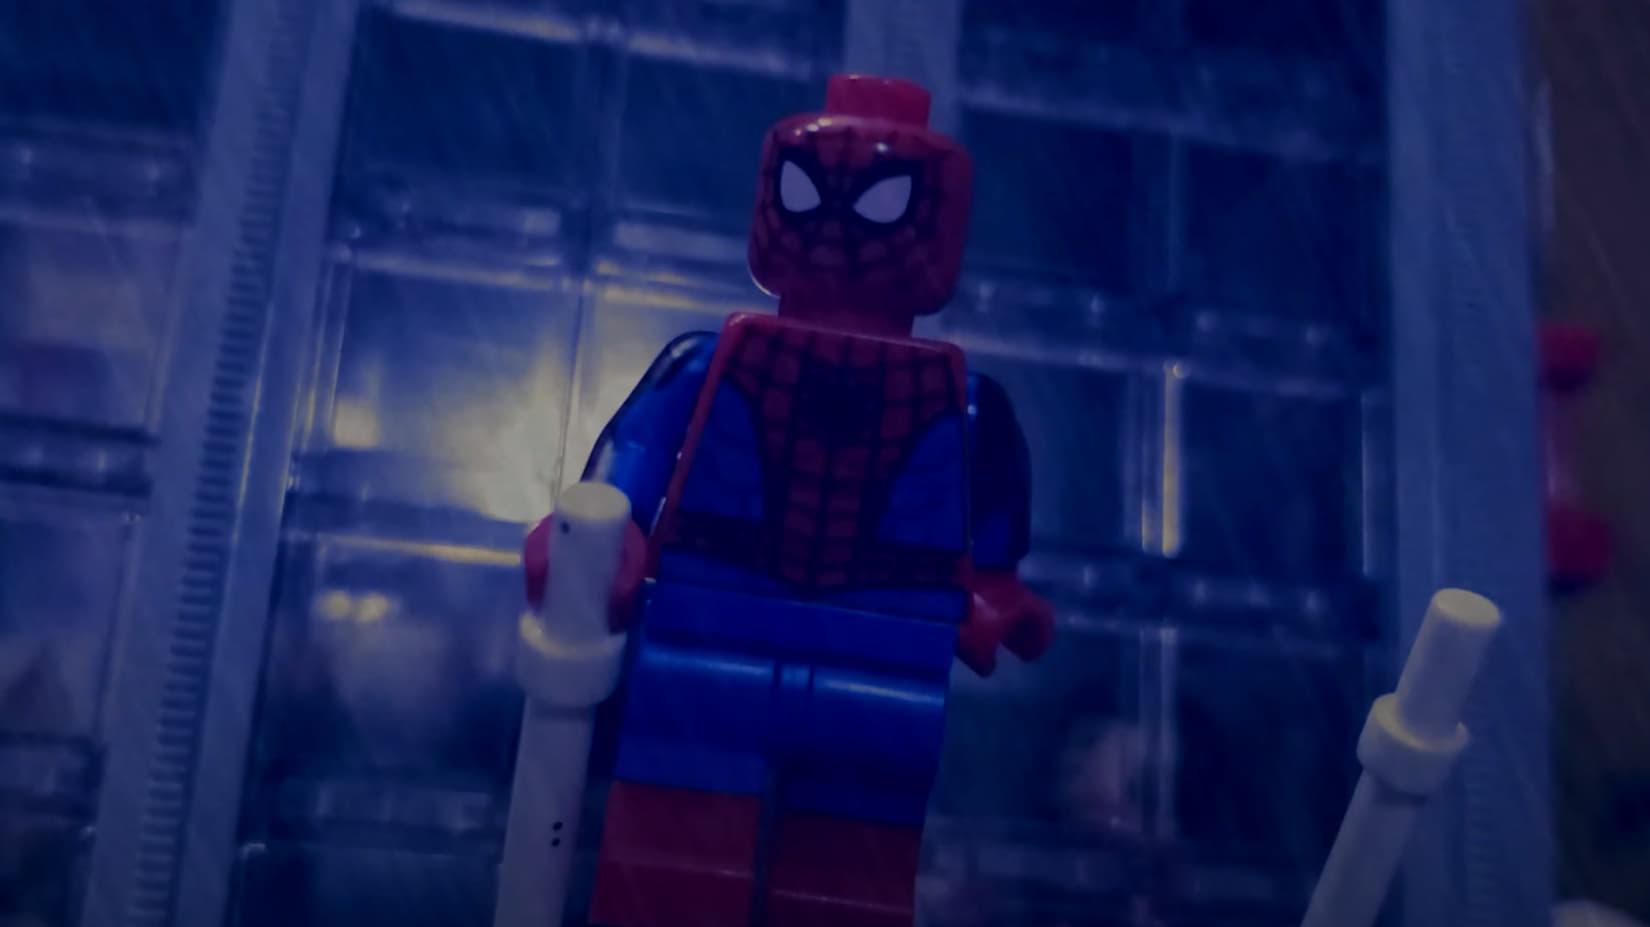 Lego Spider-Man: The Movie backdrop